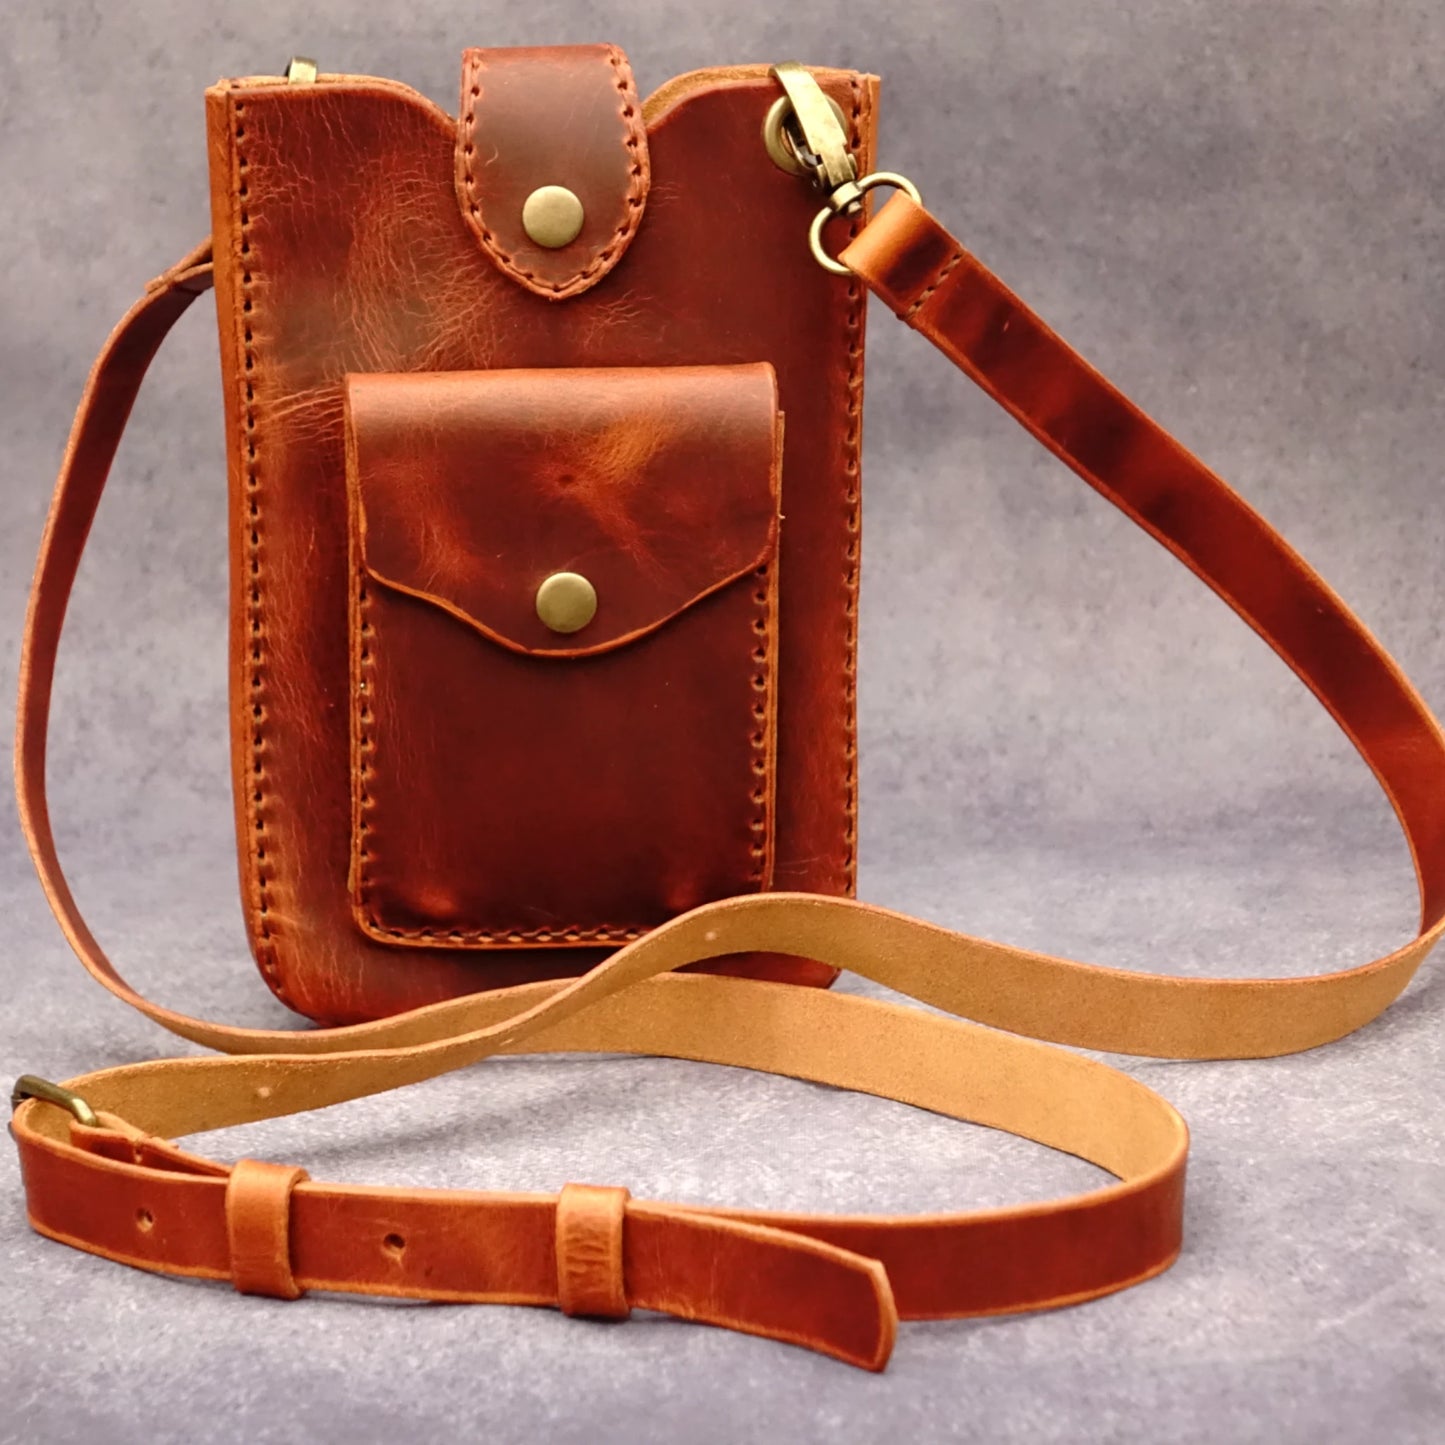 M Handmade Leather Crossbody Bag - Brown rgc handmade crafts4